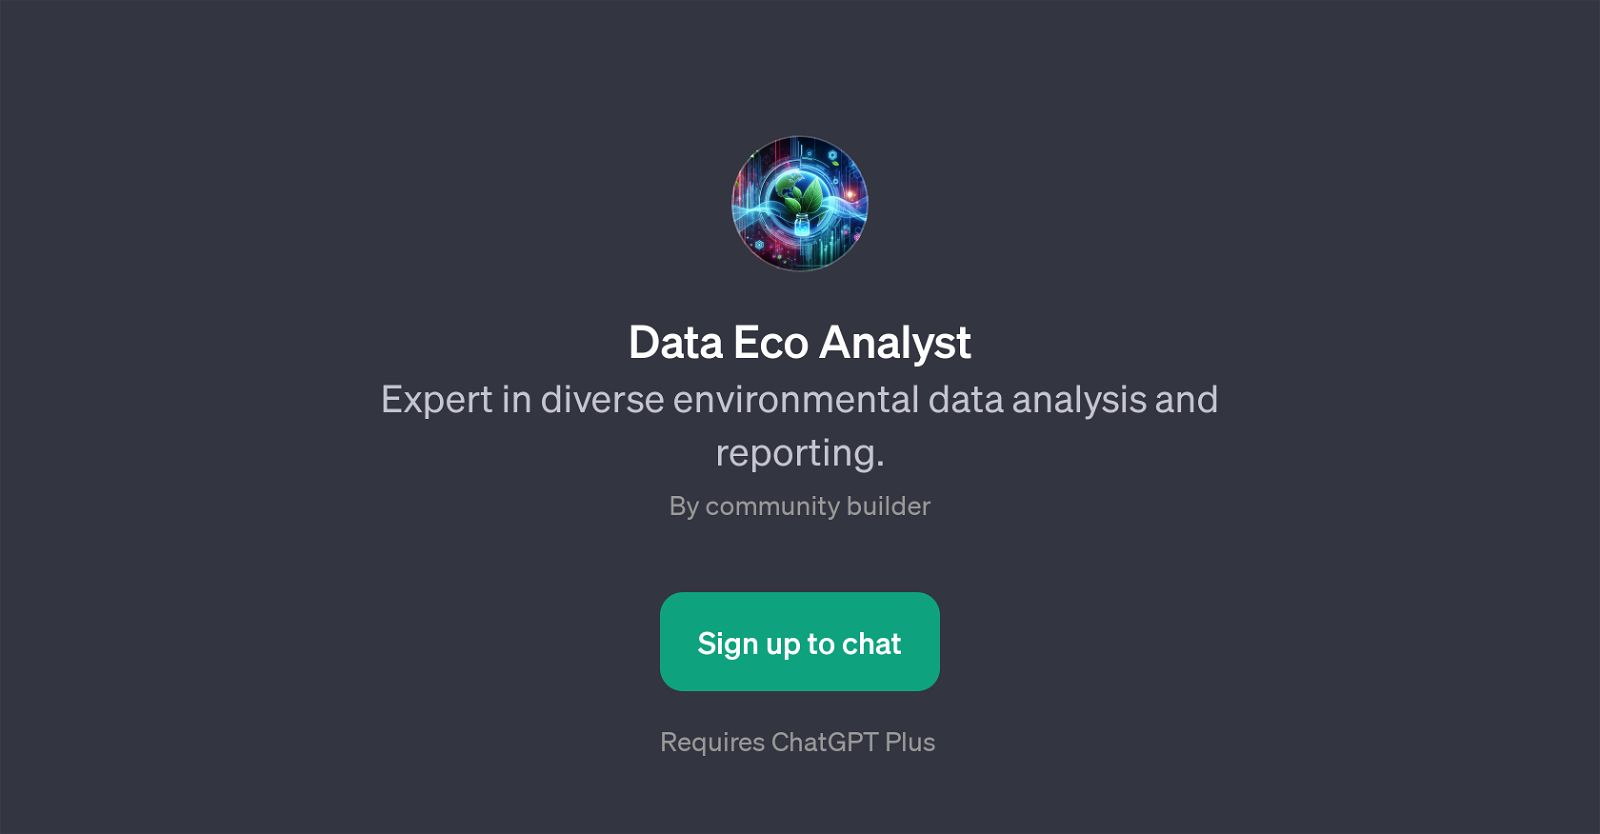 Data Eco Analyst website